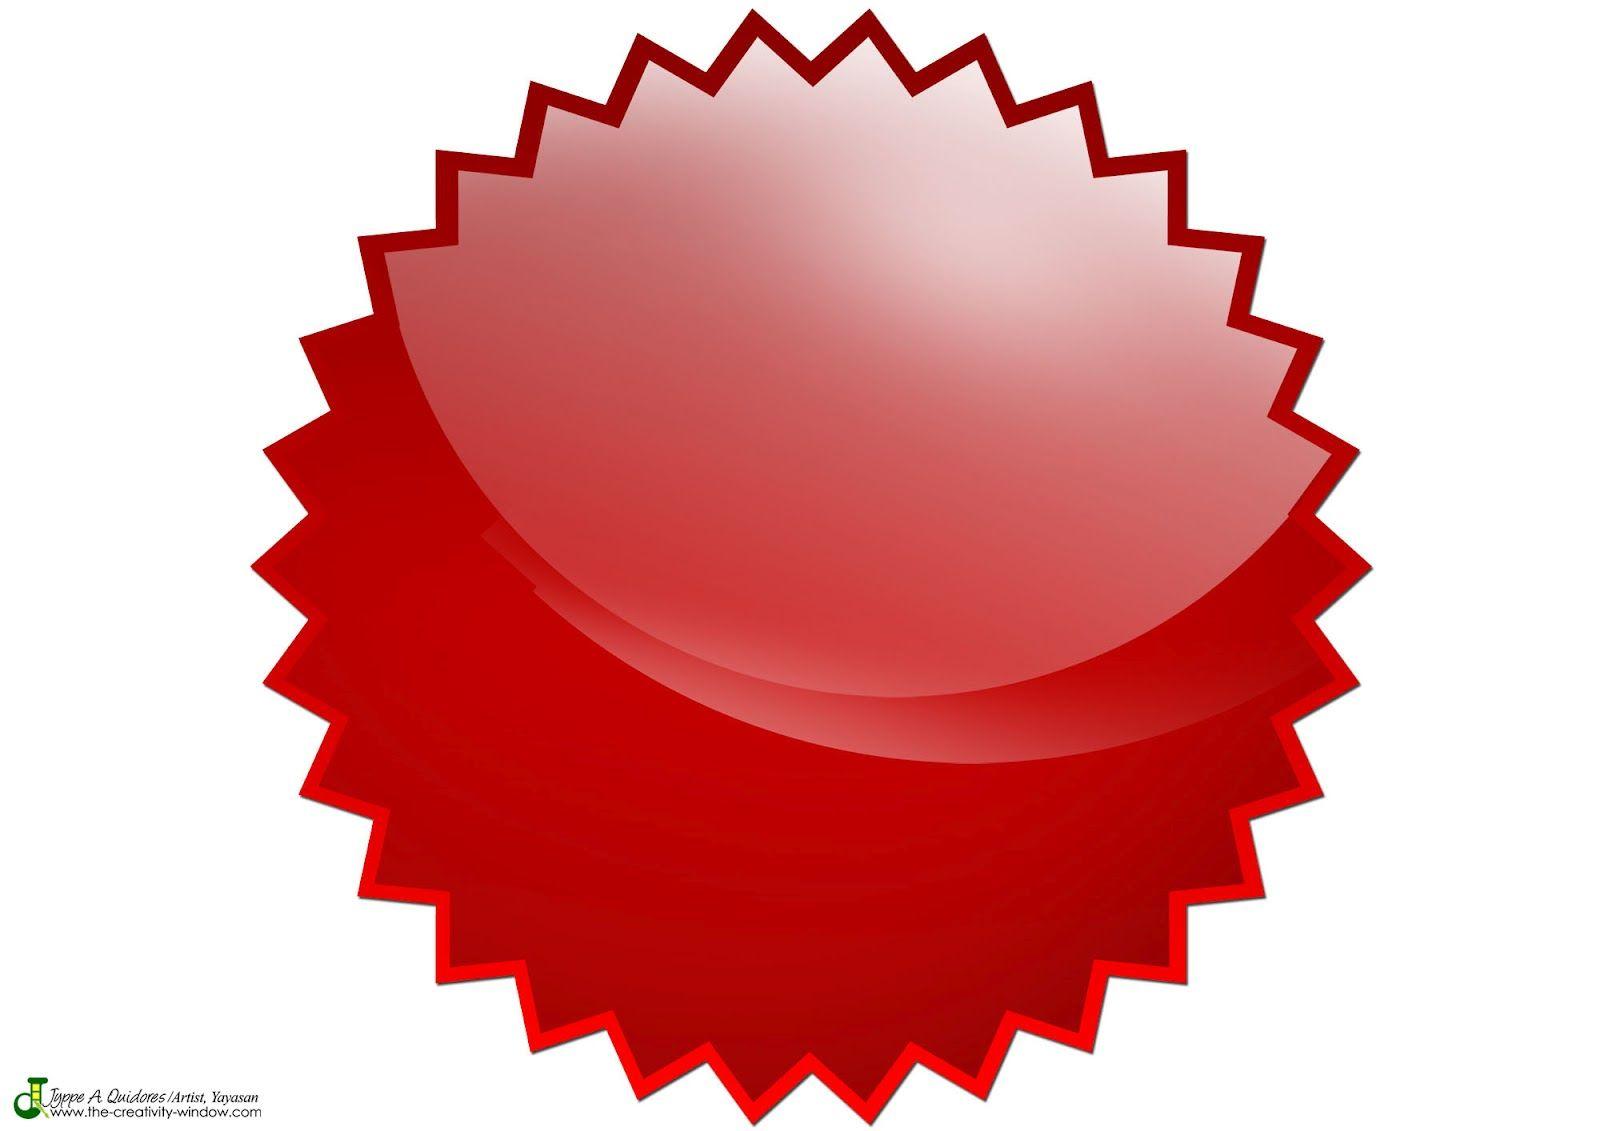 RedR in Circle Company Logo - Red Circle Company Logo - #traffic-club